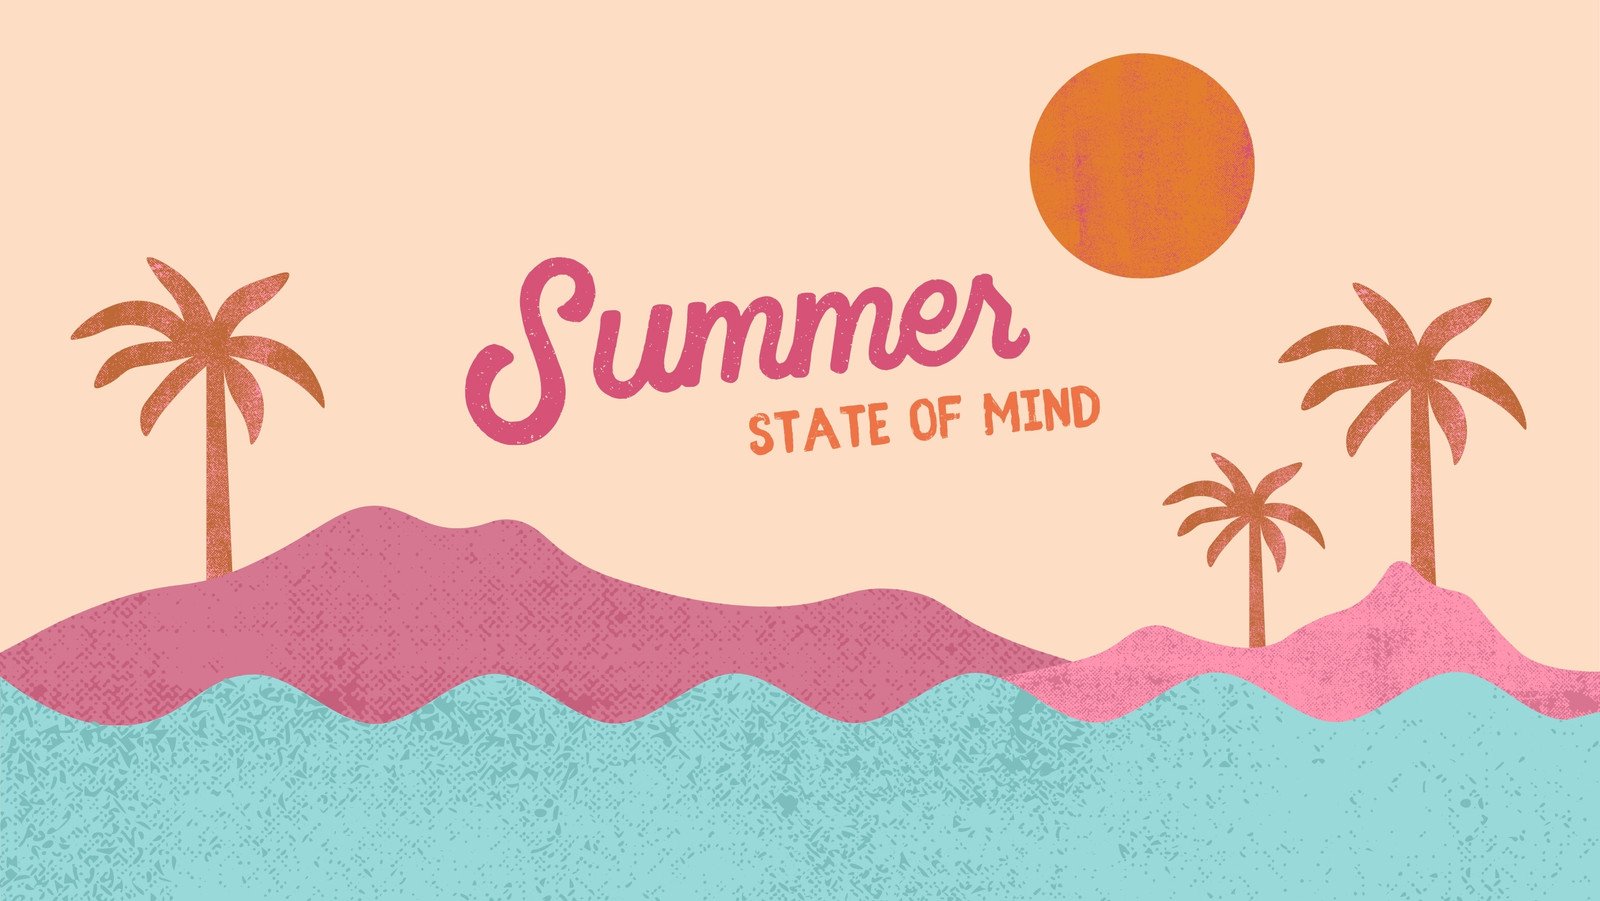 https://marketplace.canva.com/EAEmGH_39F4/1/0/1600w/canva-pink-peach-blue-illustration-summer-facebook-cover-dHxQRX2Tc30.jpg